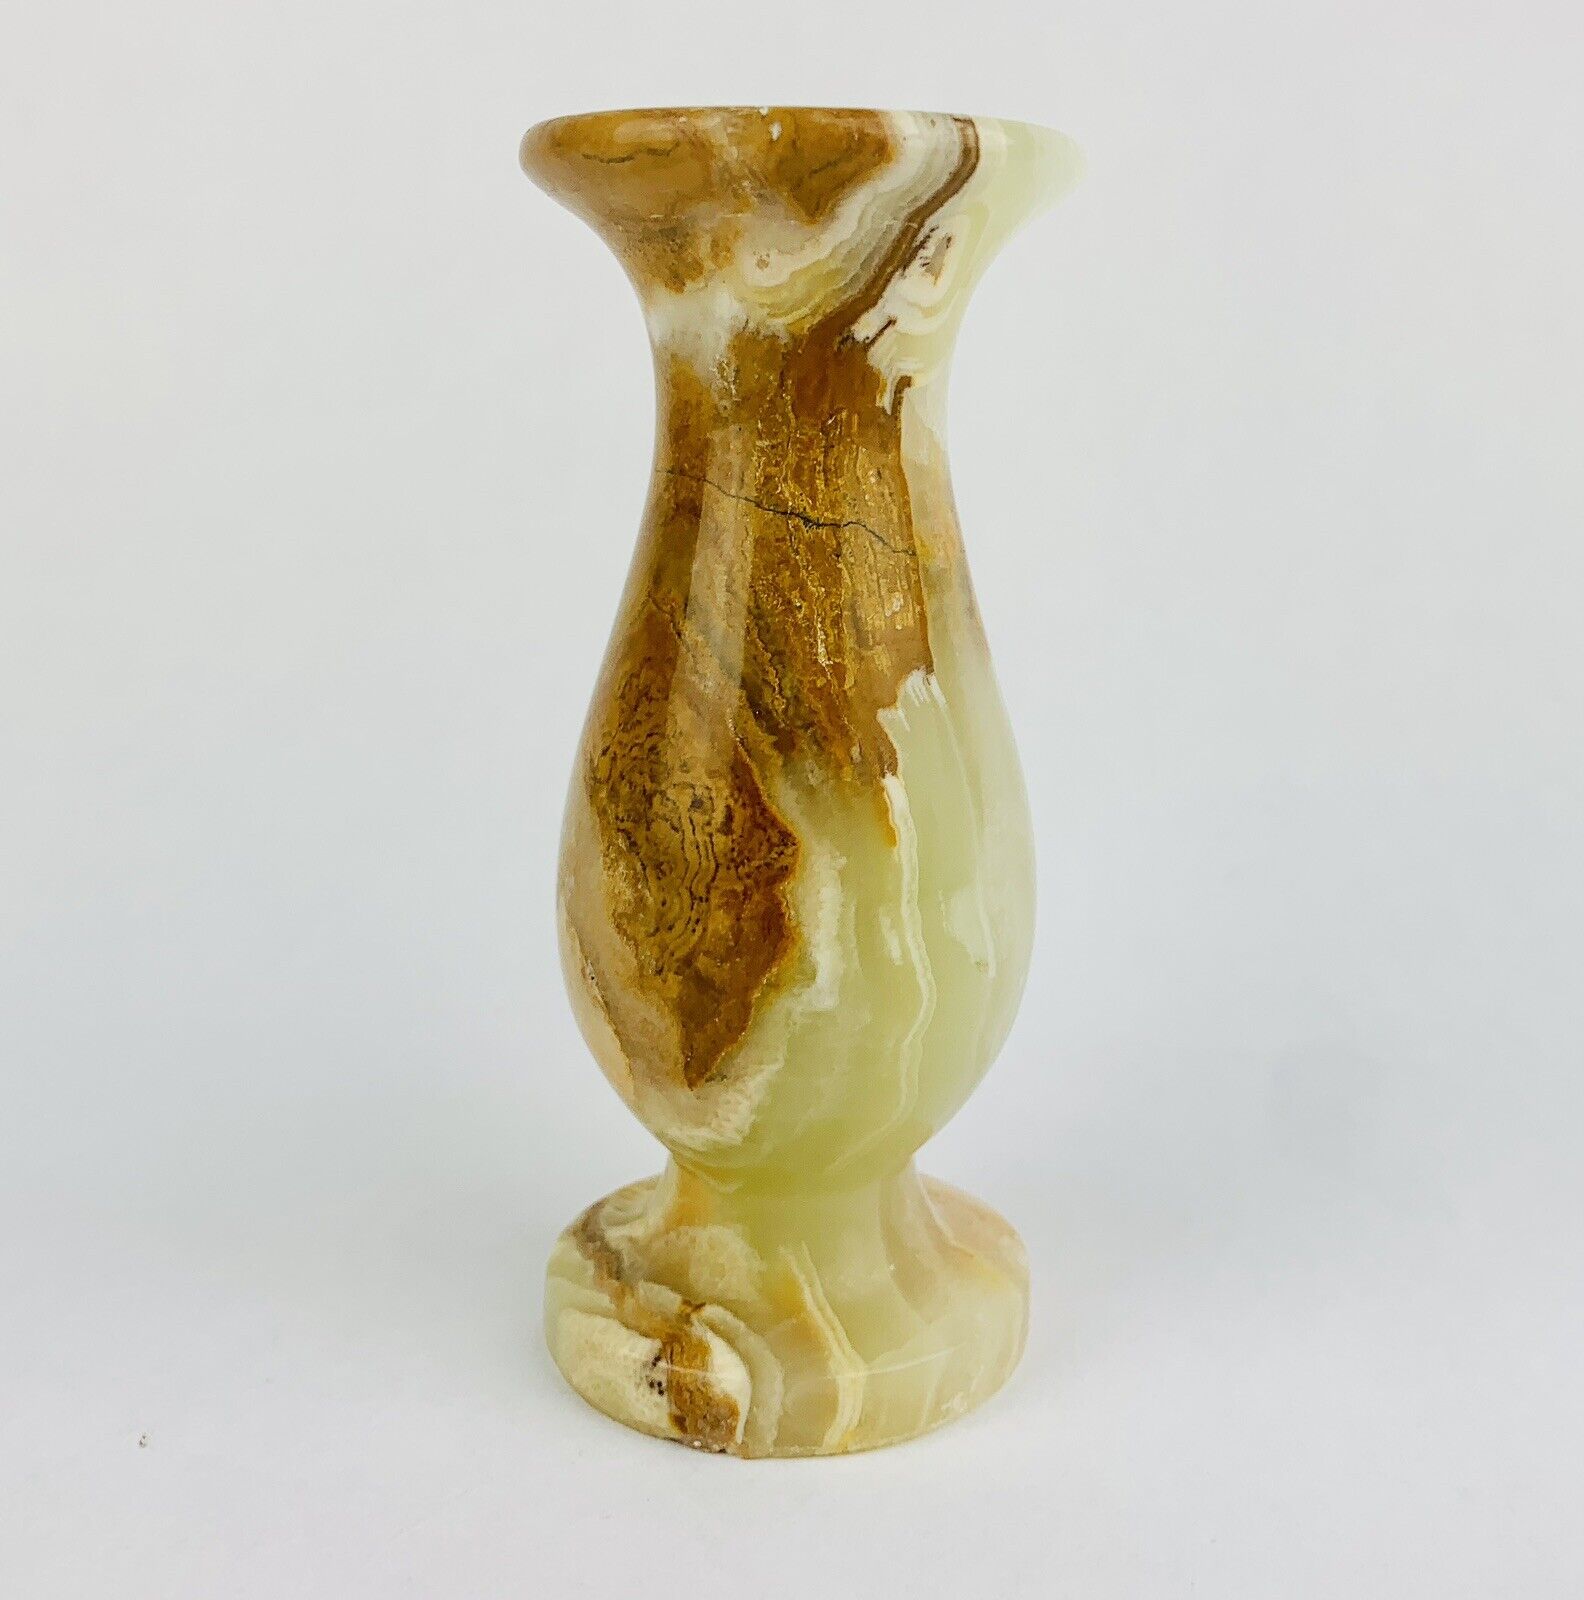 Vintage Vase Carved Marbled Onyx Stone 4” Bud Vase Marble Mystic Witchy Minerals